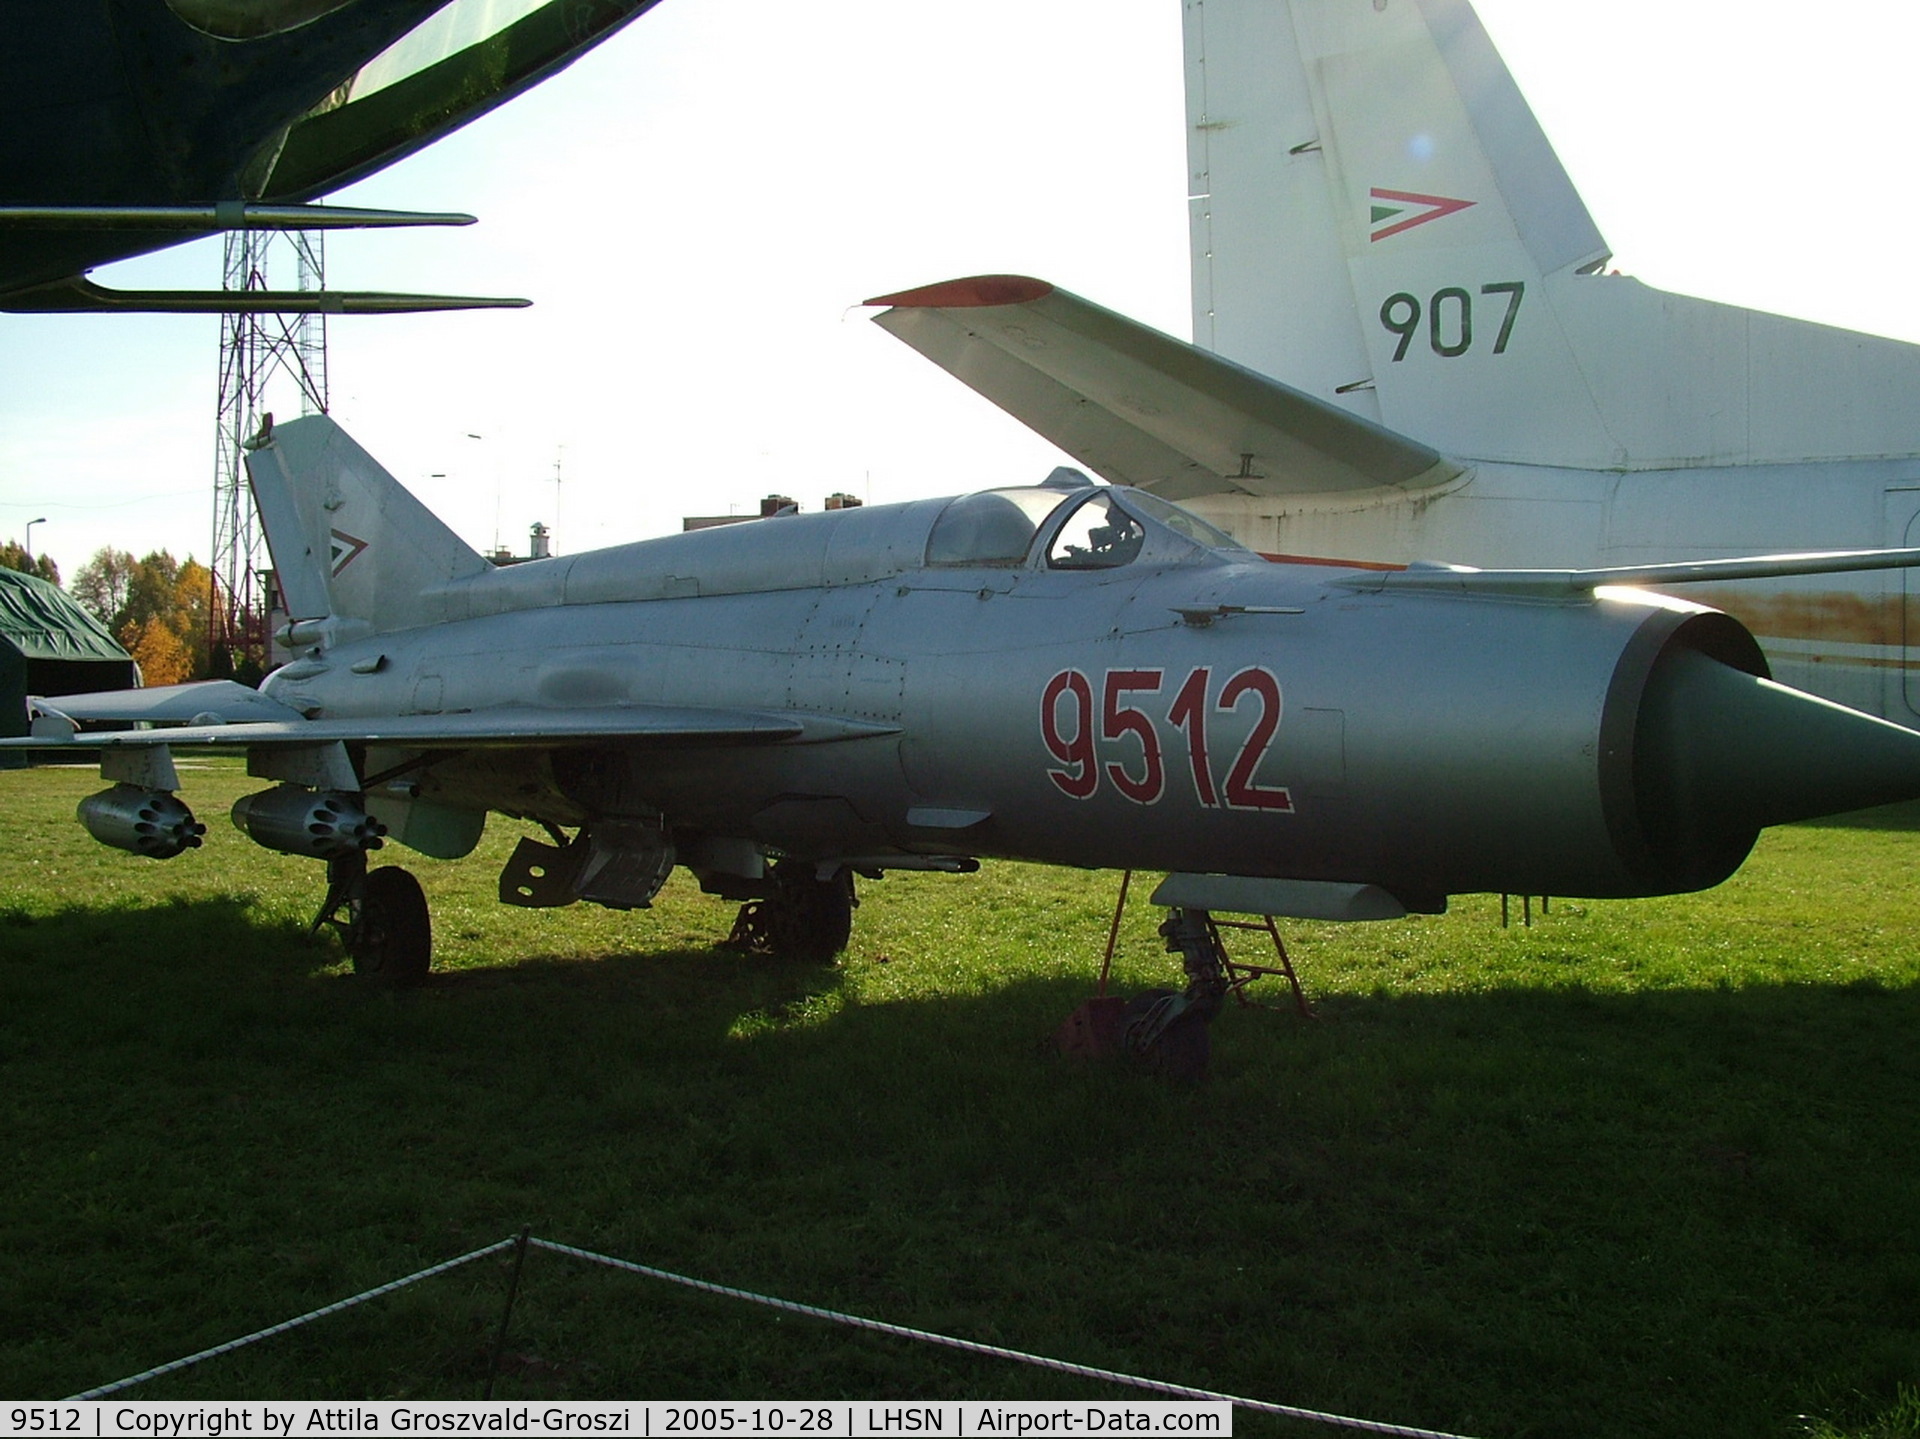 9512, 1974 Mikoyan-Gurevich MiG-21MF C/N 969512, Szolnok airplane museum, Hungary